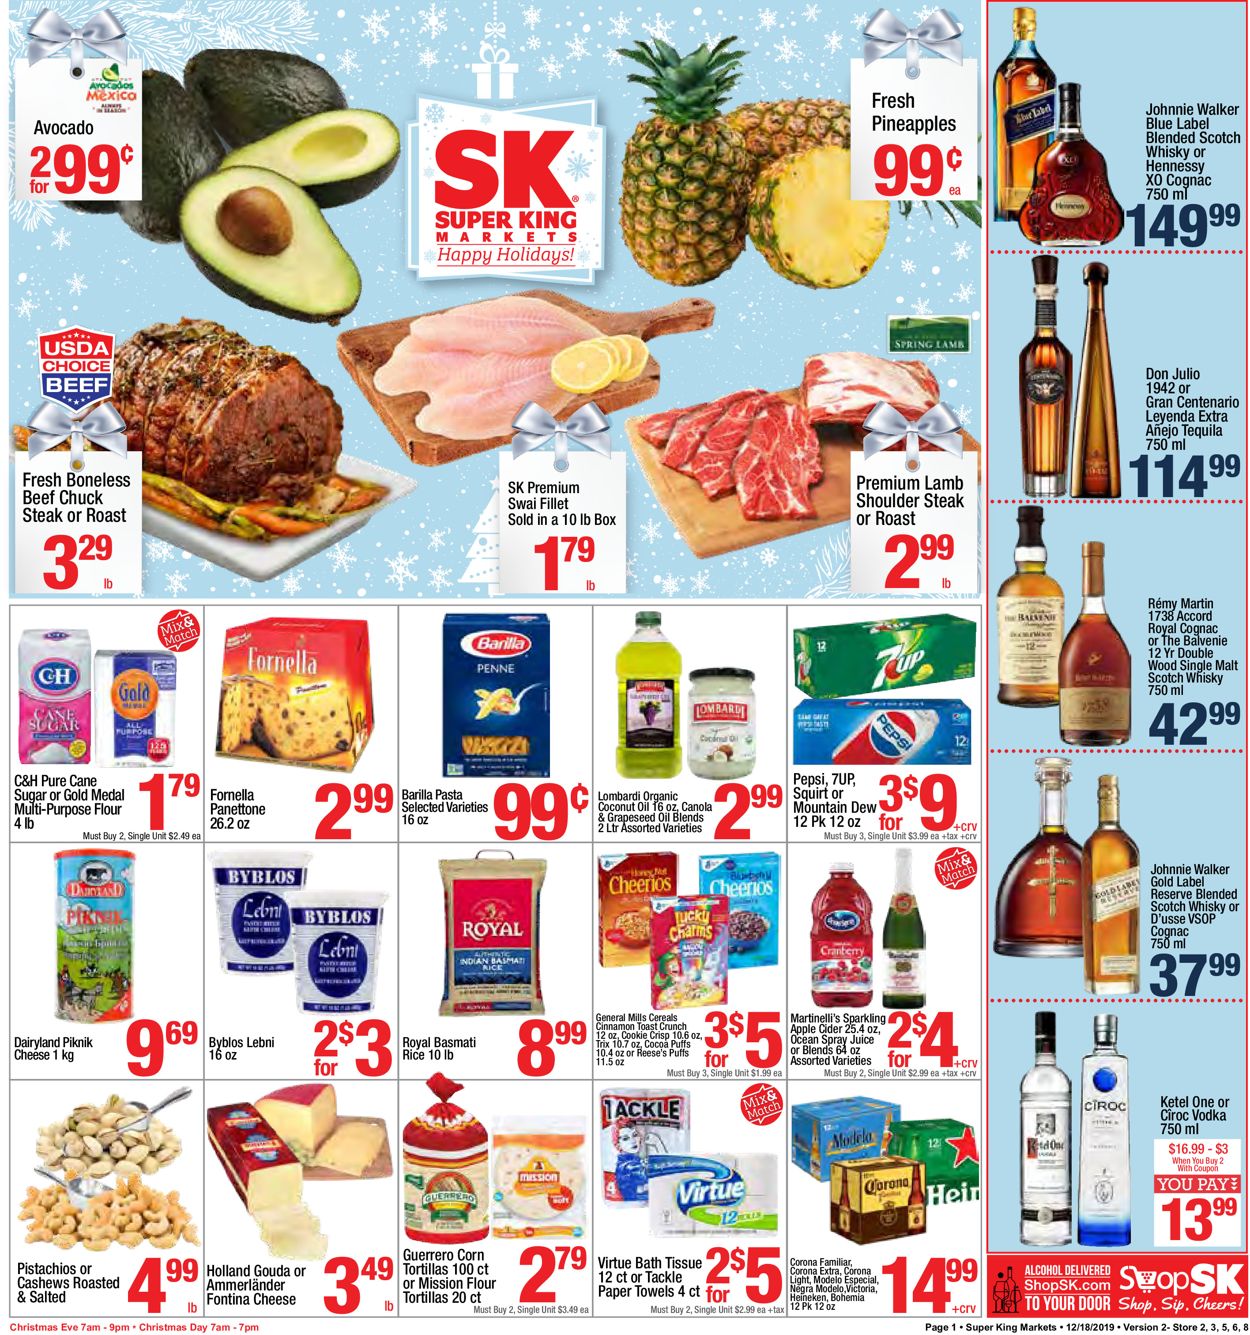 Catalogue Super King Market - Holidays Ad 2019 from 12/18/2019